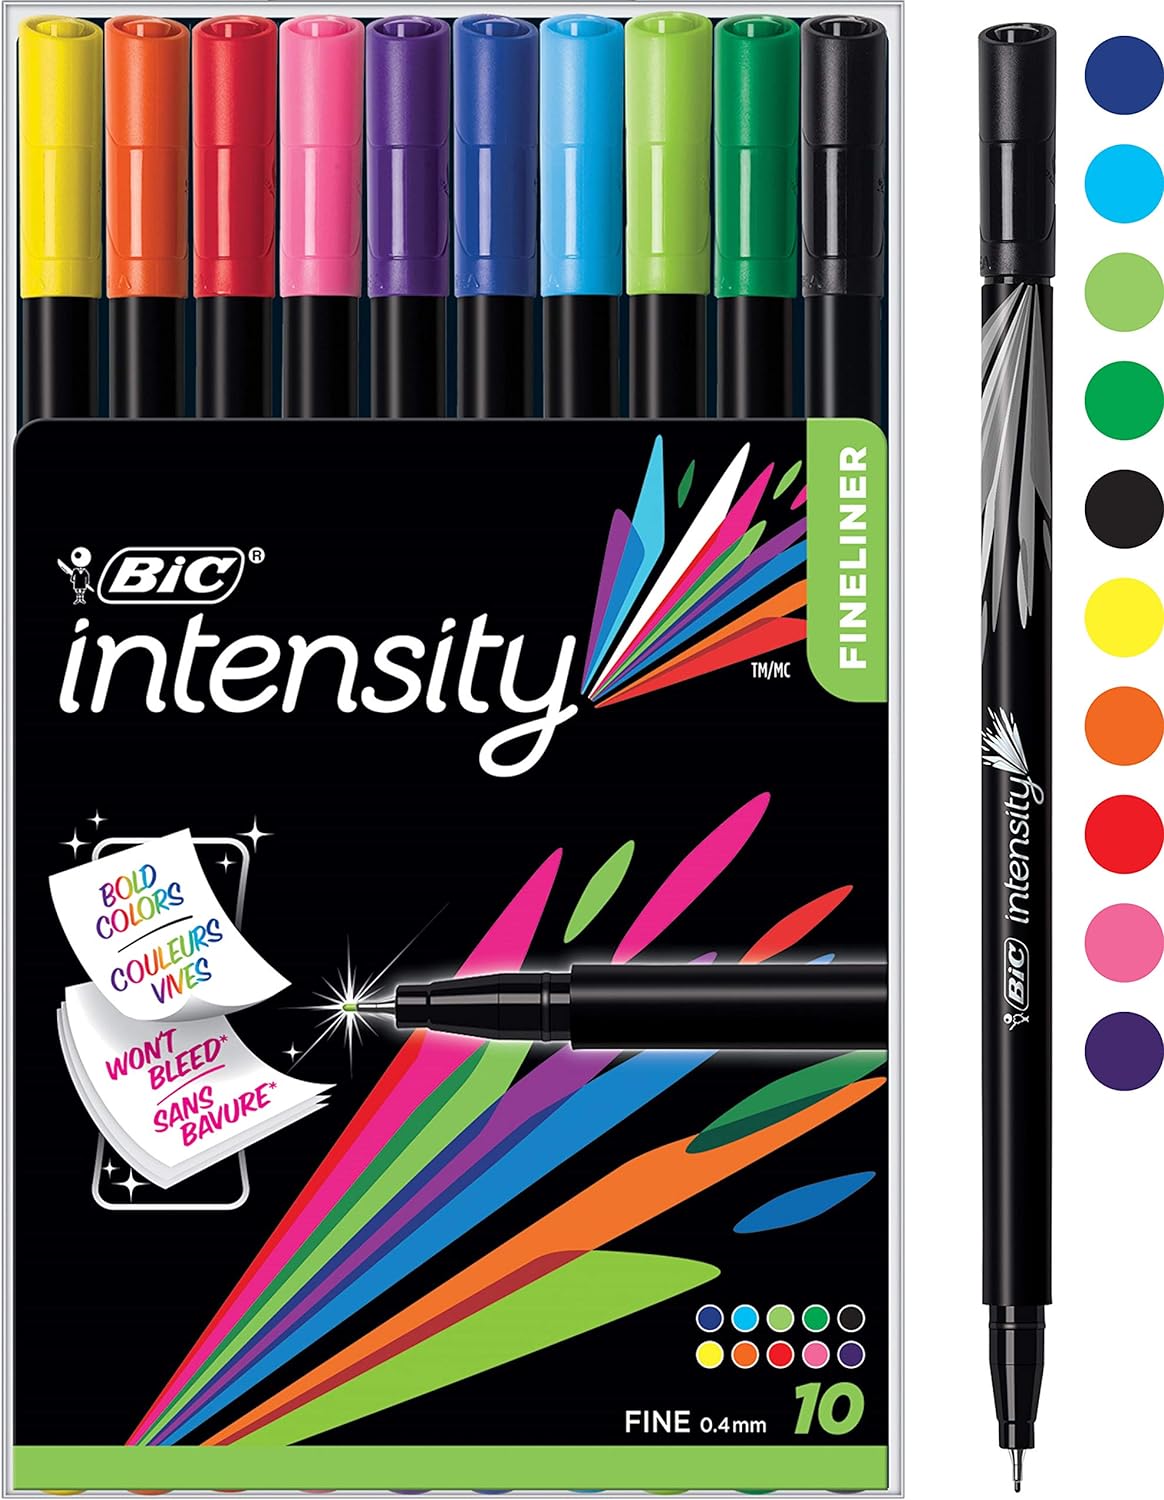 BIC Intensity Fineliner Marker Pen, Fine Point (0.8 mm), Assorted Colors, Clean & Crisp Writing, 10-Count